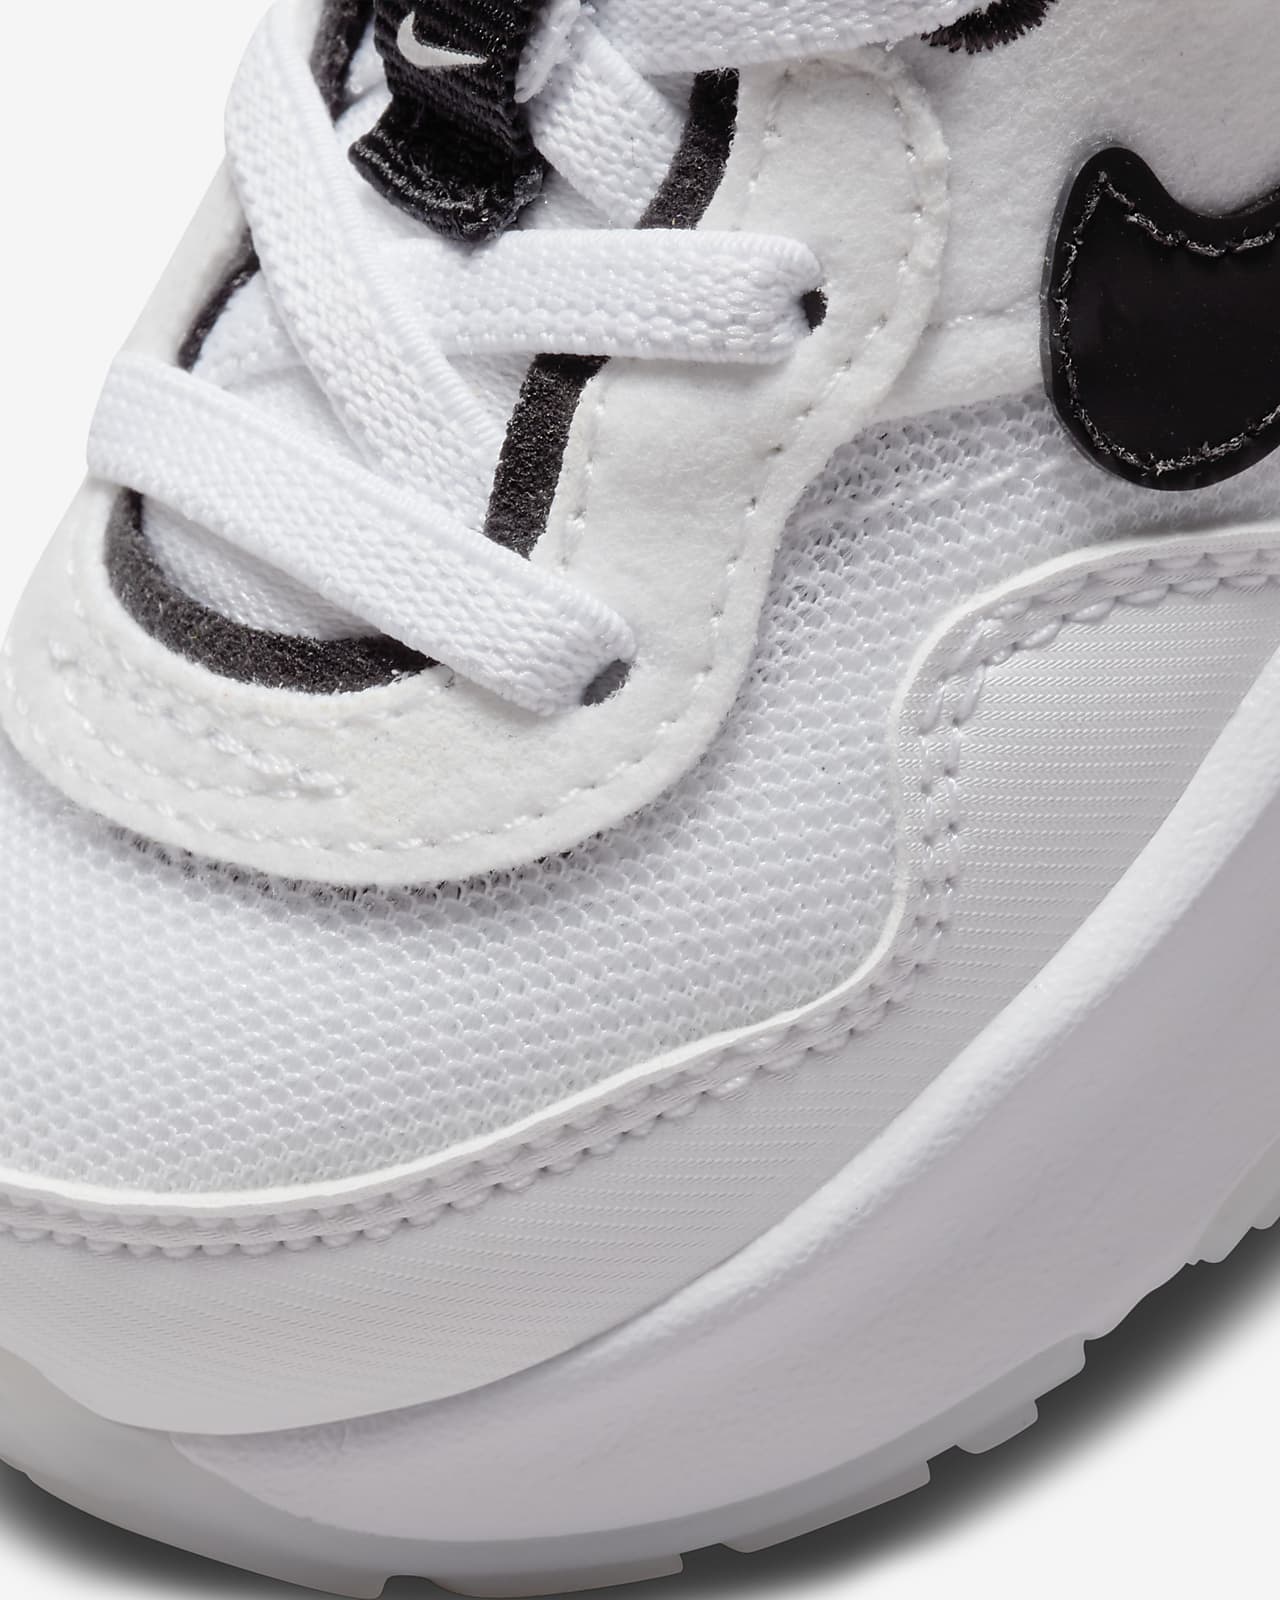 Nike Air Max Motif Baby/Toddler Shoes